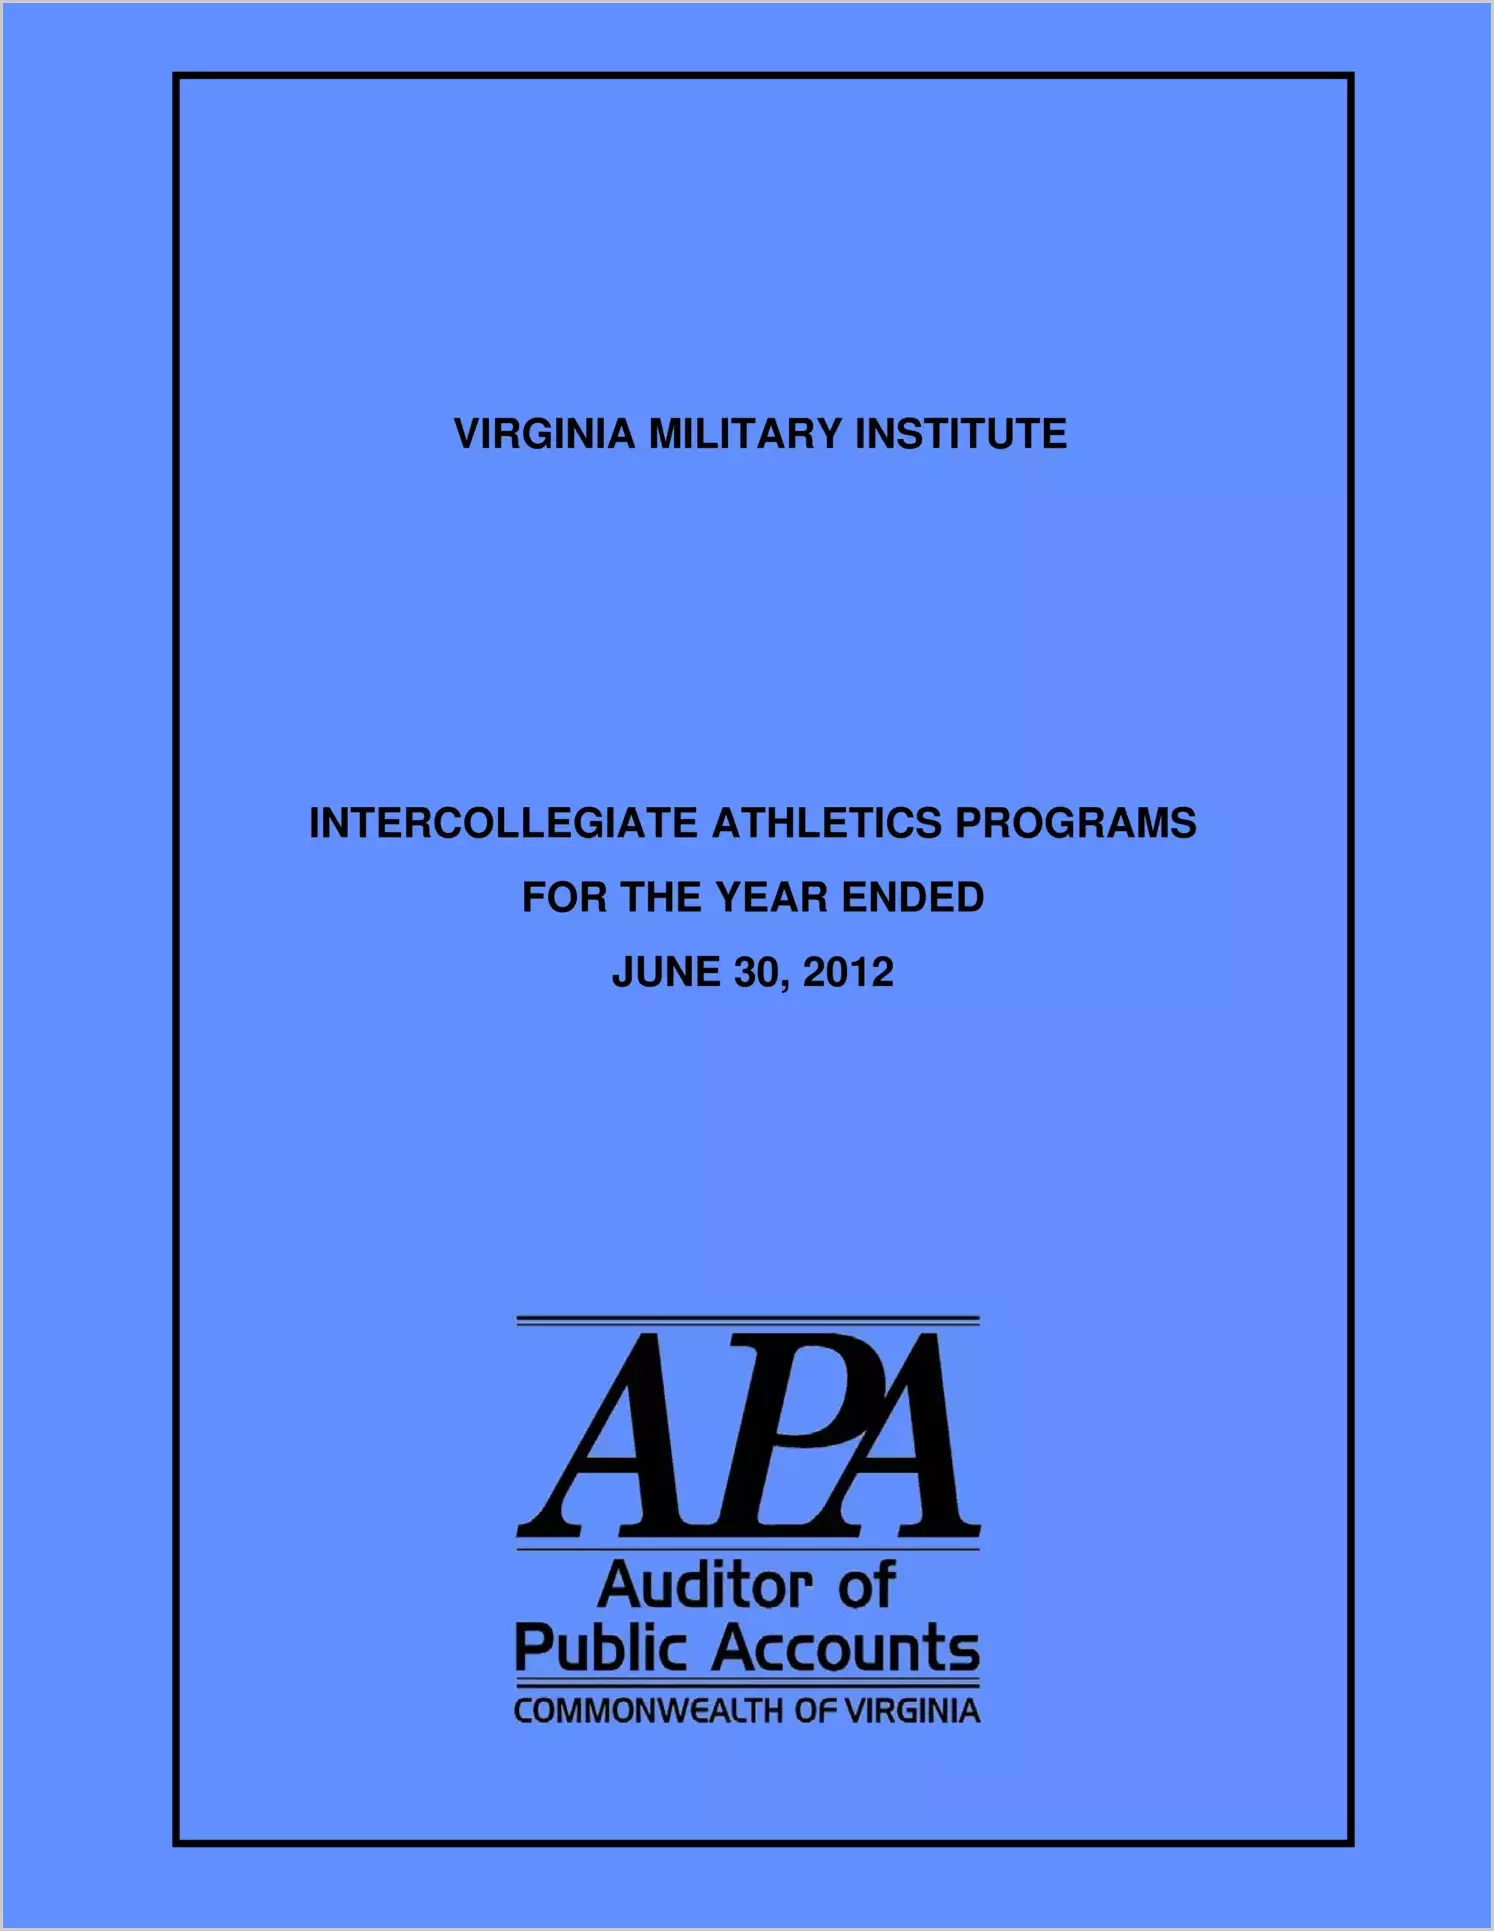 Virginia Military Institute Intercollegiate Athletics Programs for the year ended June 30, 2012